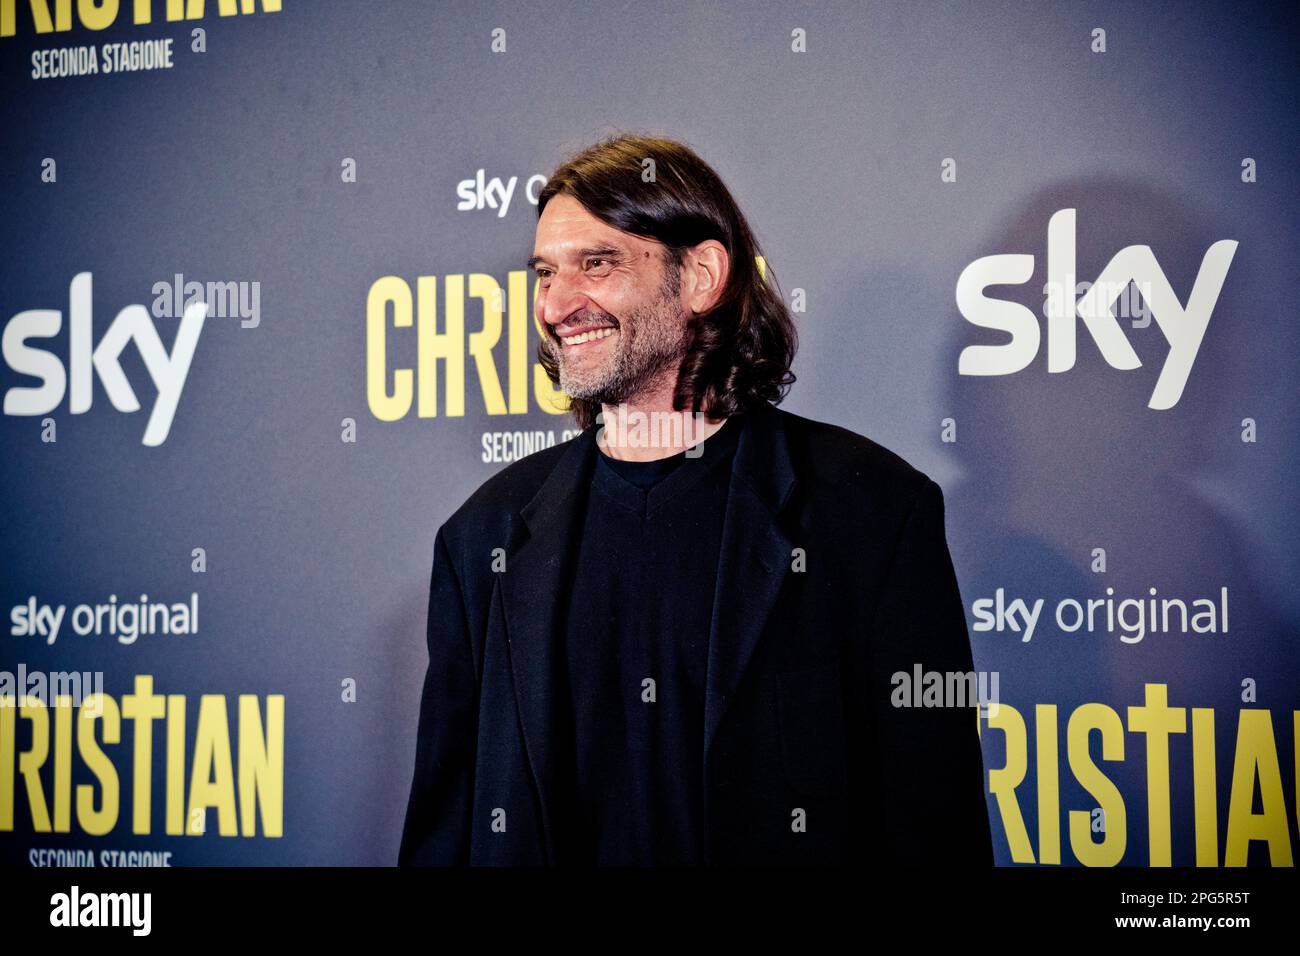 Rome, Italy, 20th March 2023, Ivan Franek attends the premiere of 'Christian - seconda stagione' at Cinema Barberini (Photo credits: Giovanna Onofri) Stock Photo